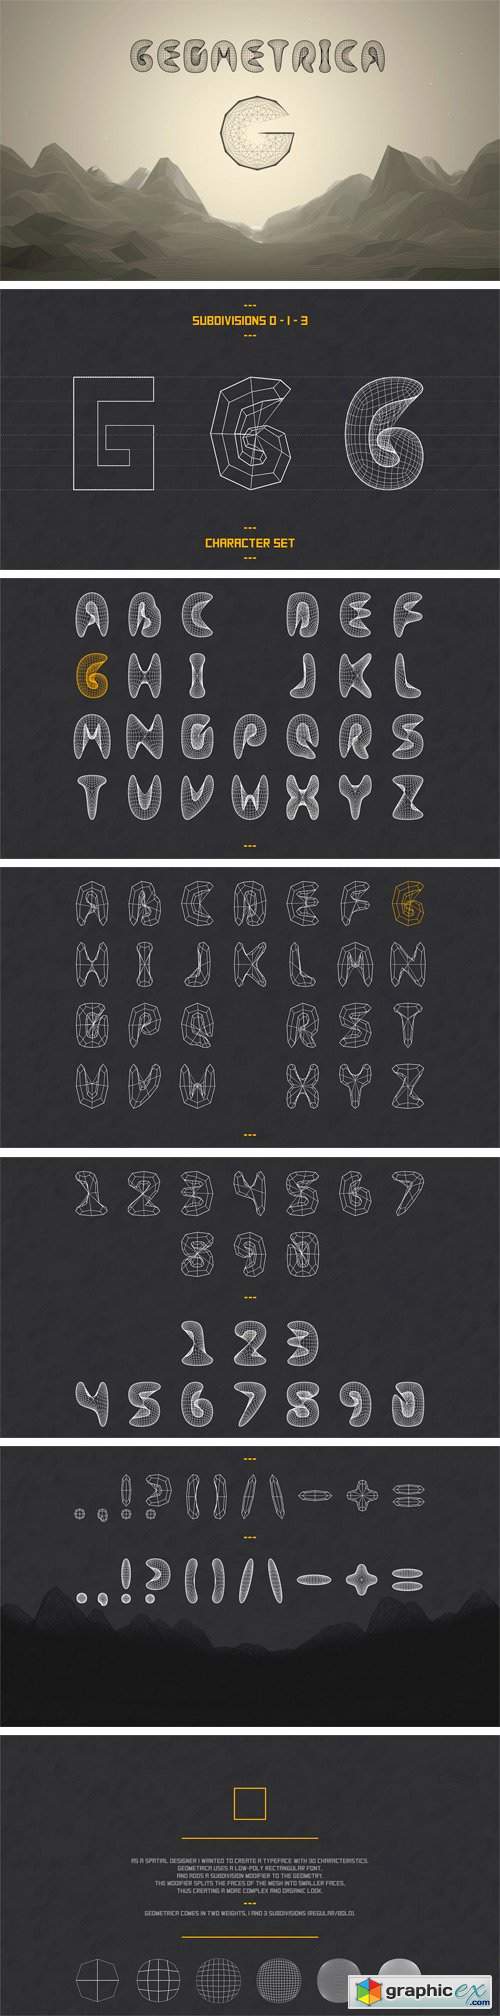 GEOMETRICA Typeface